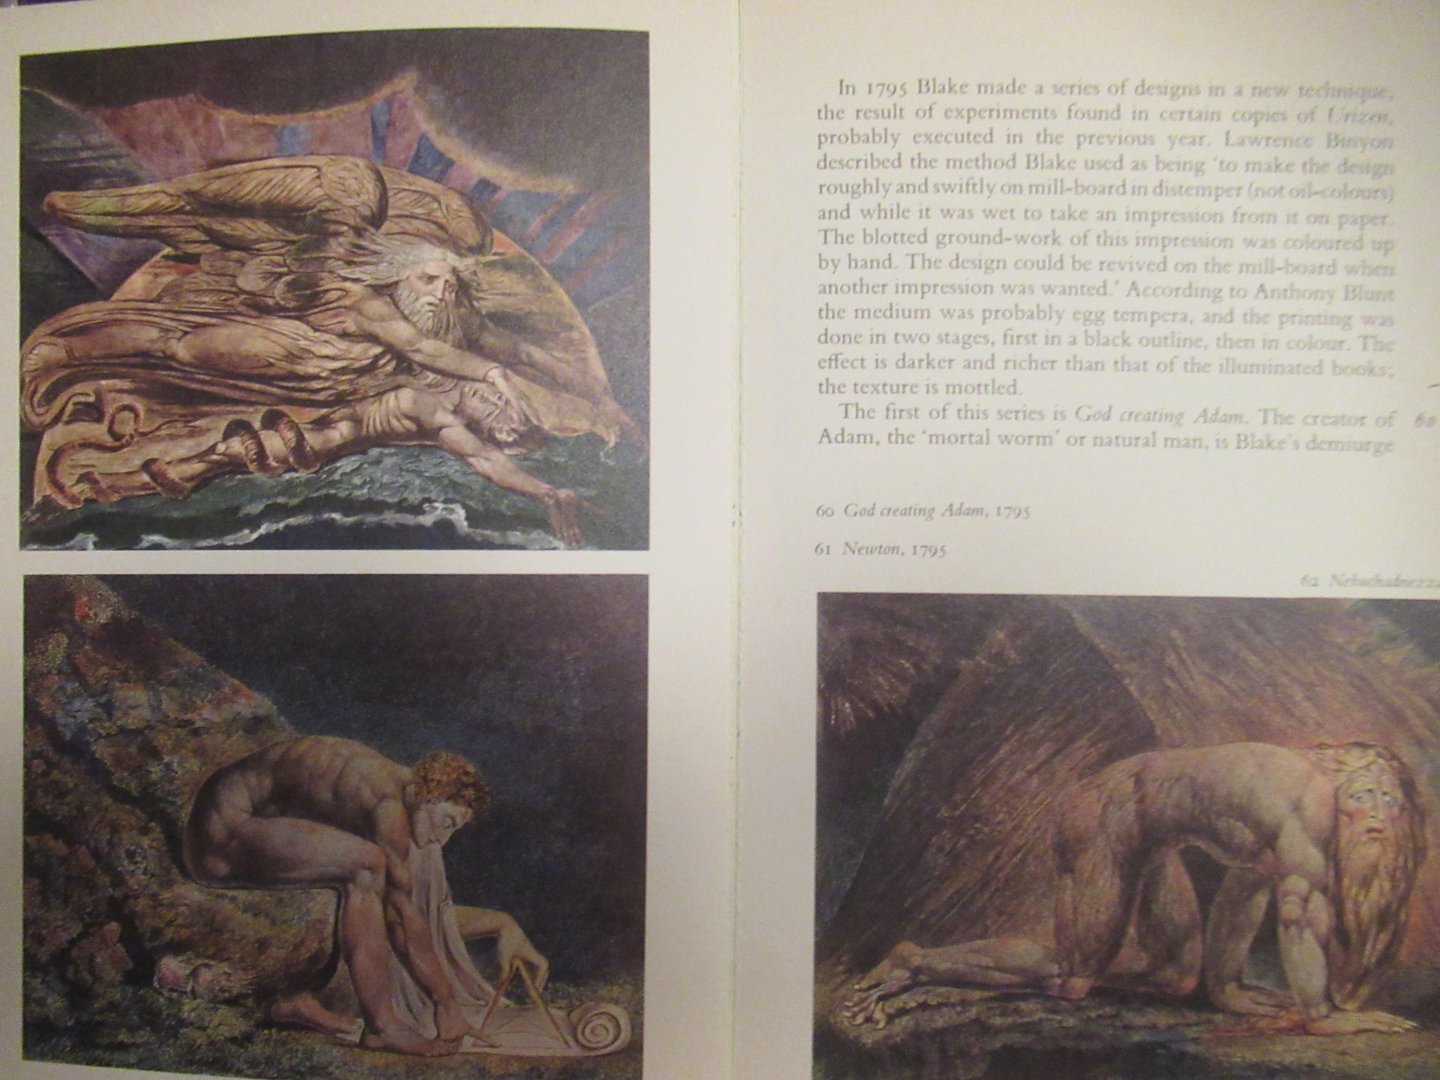 Raine, Kathleen - William Blake. 156 plates 28 in colour